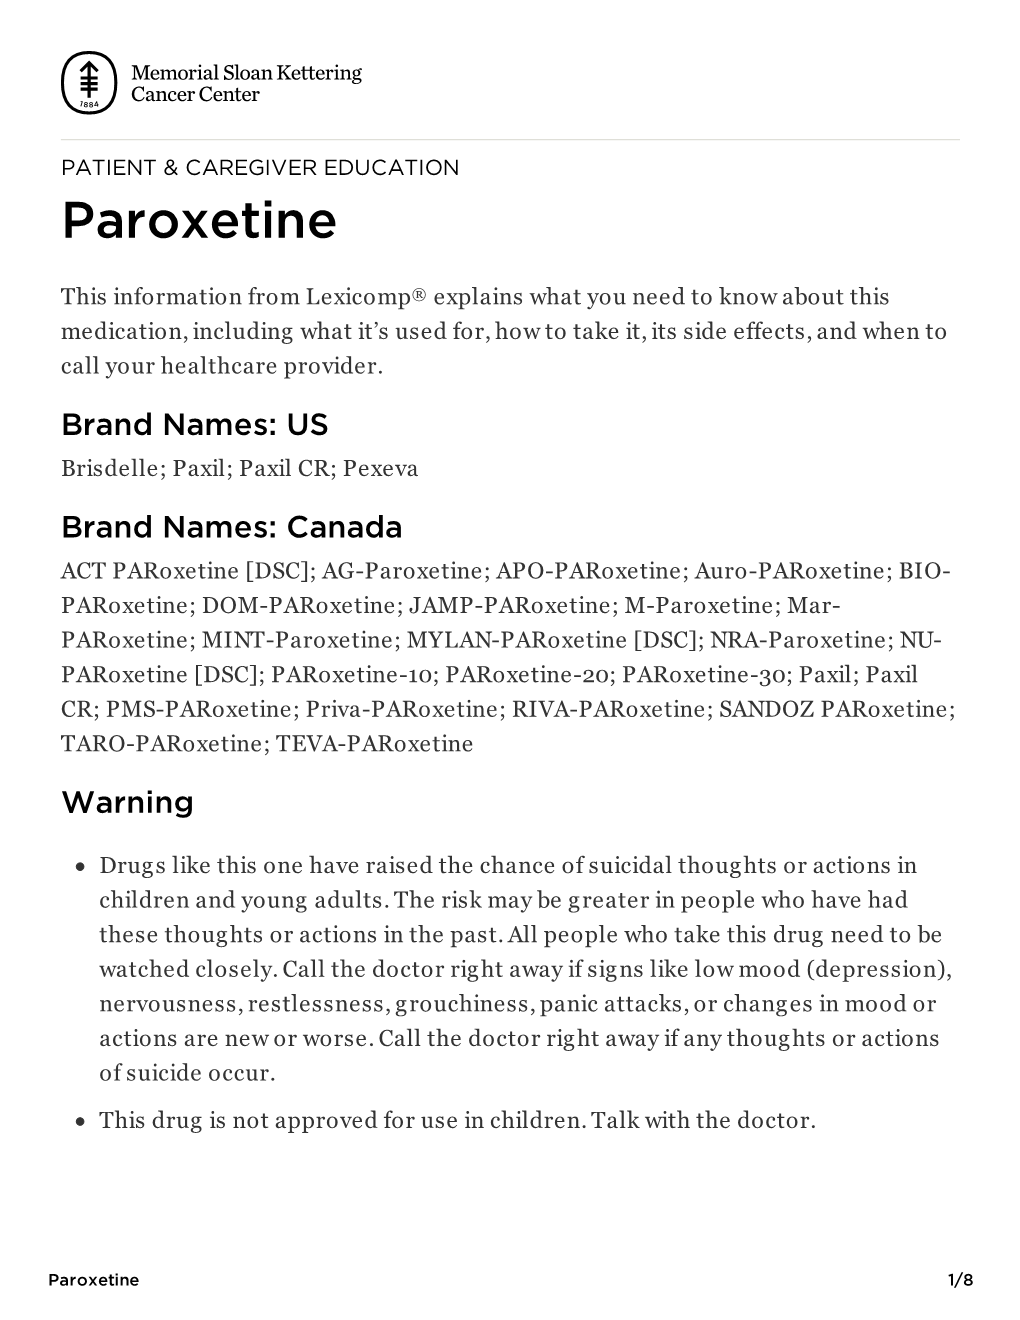 Paroxetine | Memorial Sloan Kettering Cancer Center